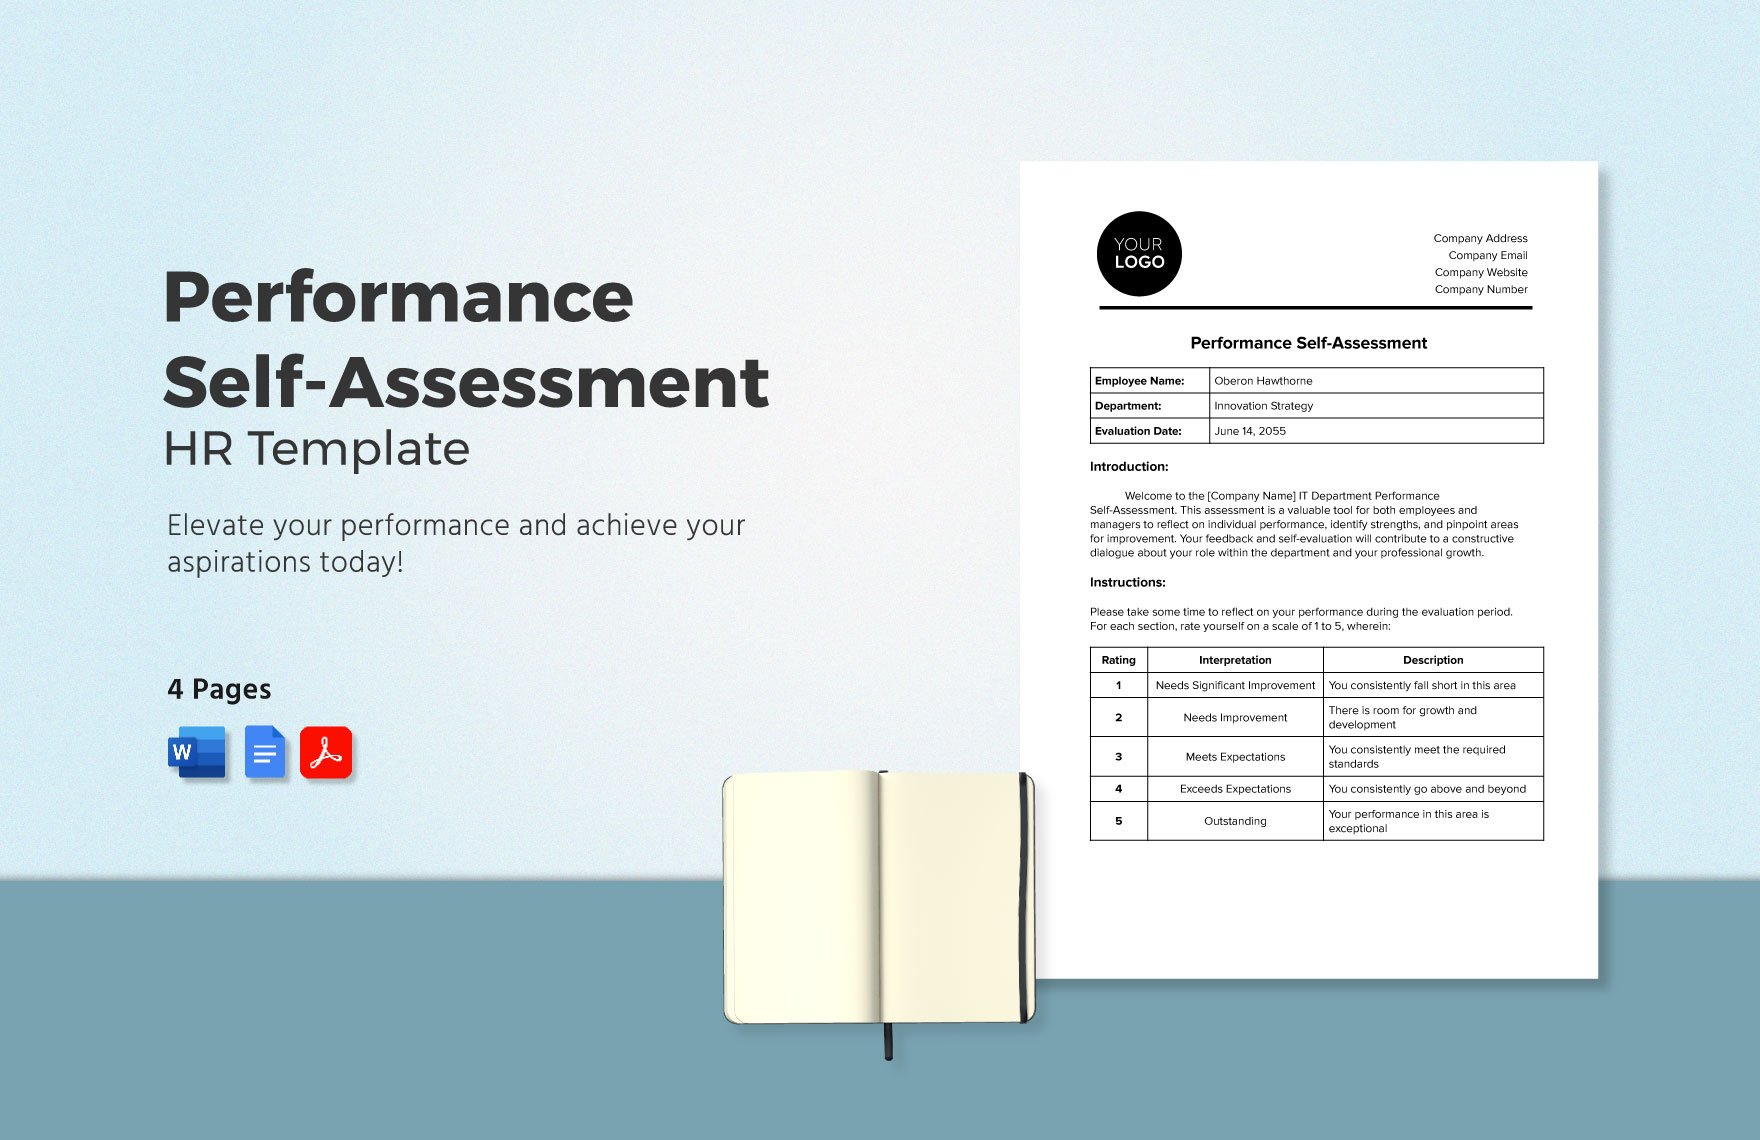 Performance Self-Assessment HR Template